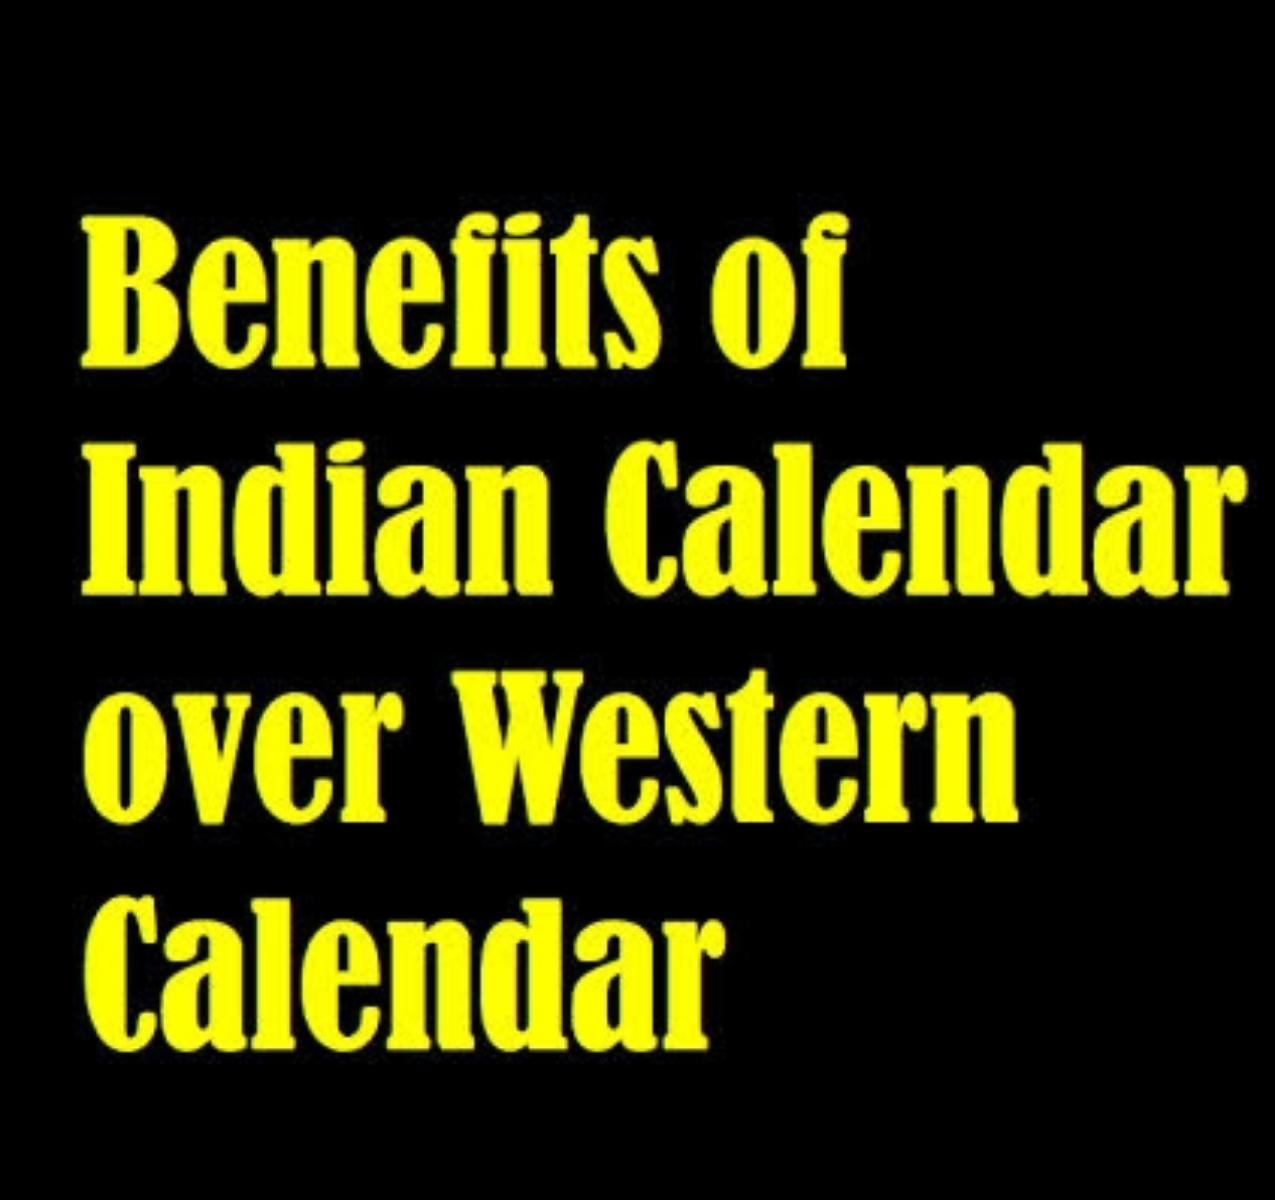 Difference Between the Hindu Calendar and the Gregorian Calendar